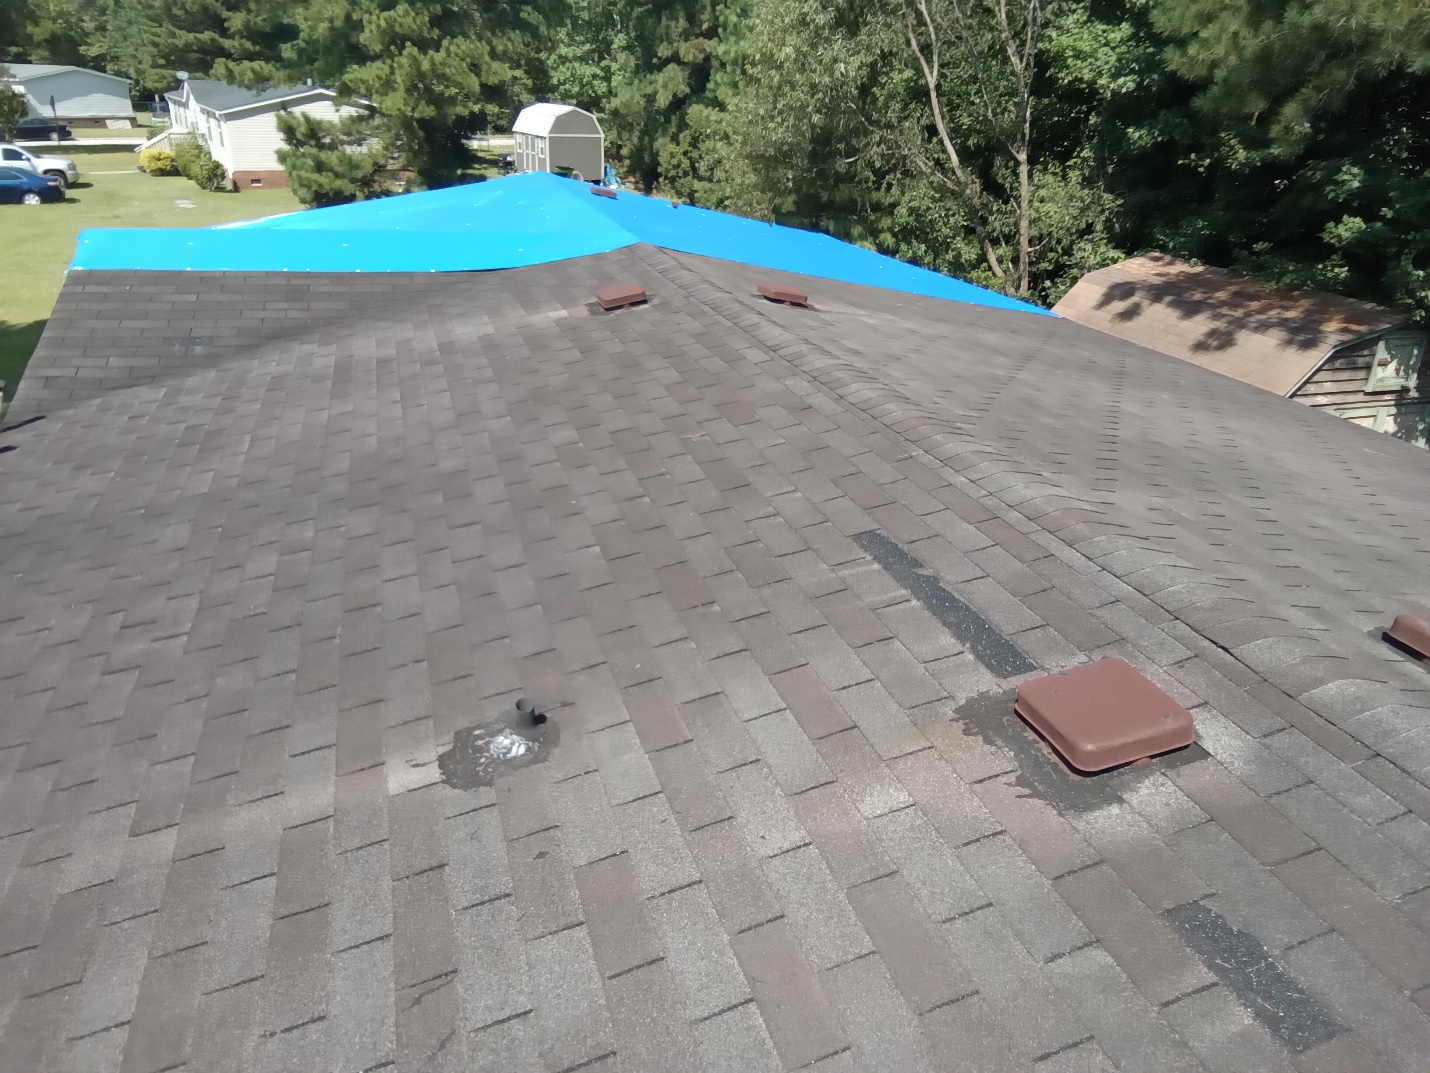 Metal roof installation in progress